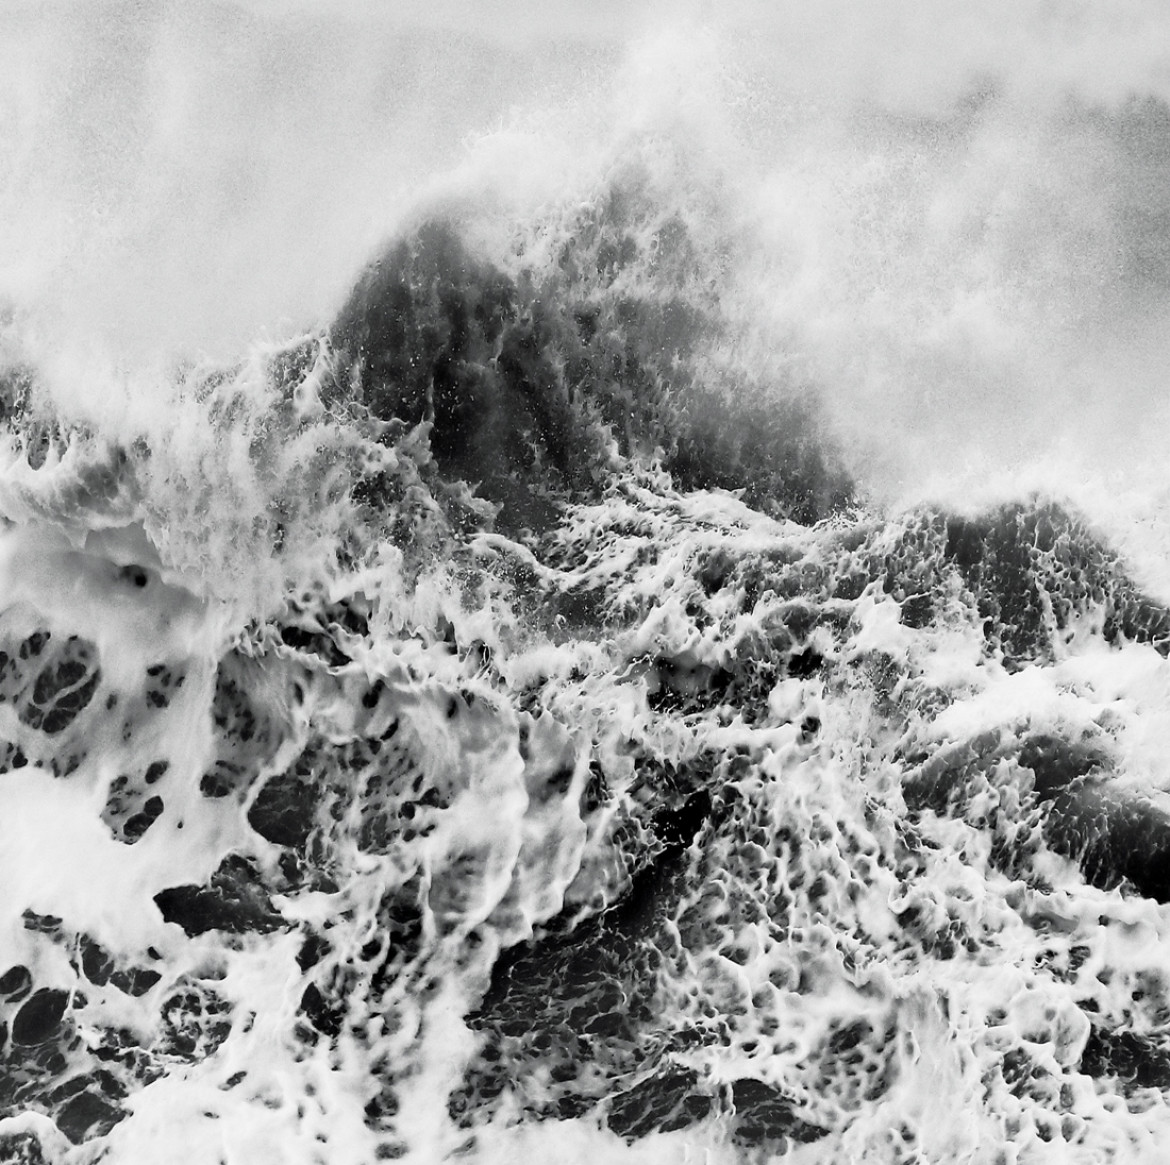 fot. Romain Tornay, z cyklu "Ocean", 1. nagroda w kategorii Nature & Wildlife / Monovisions Photography Awards 2019